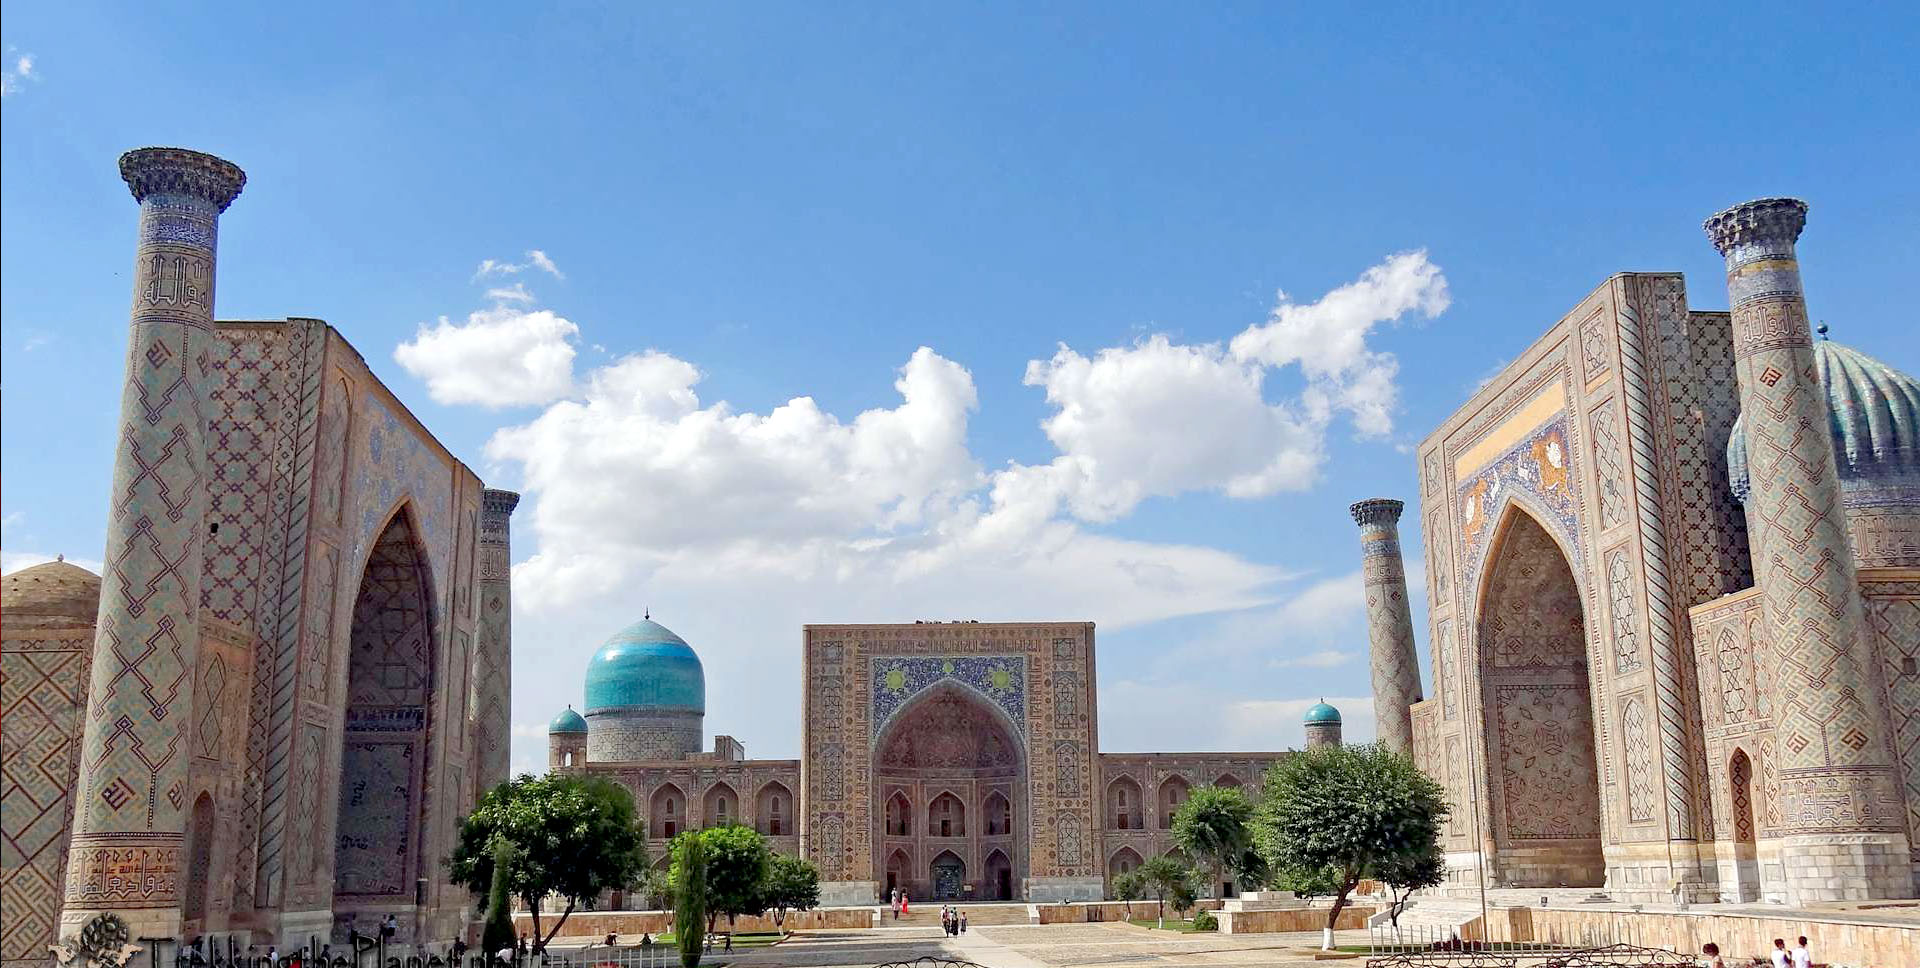 Do you know the sights of Uzbekistan?